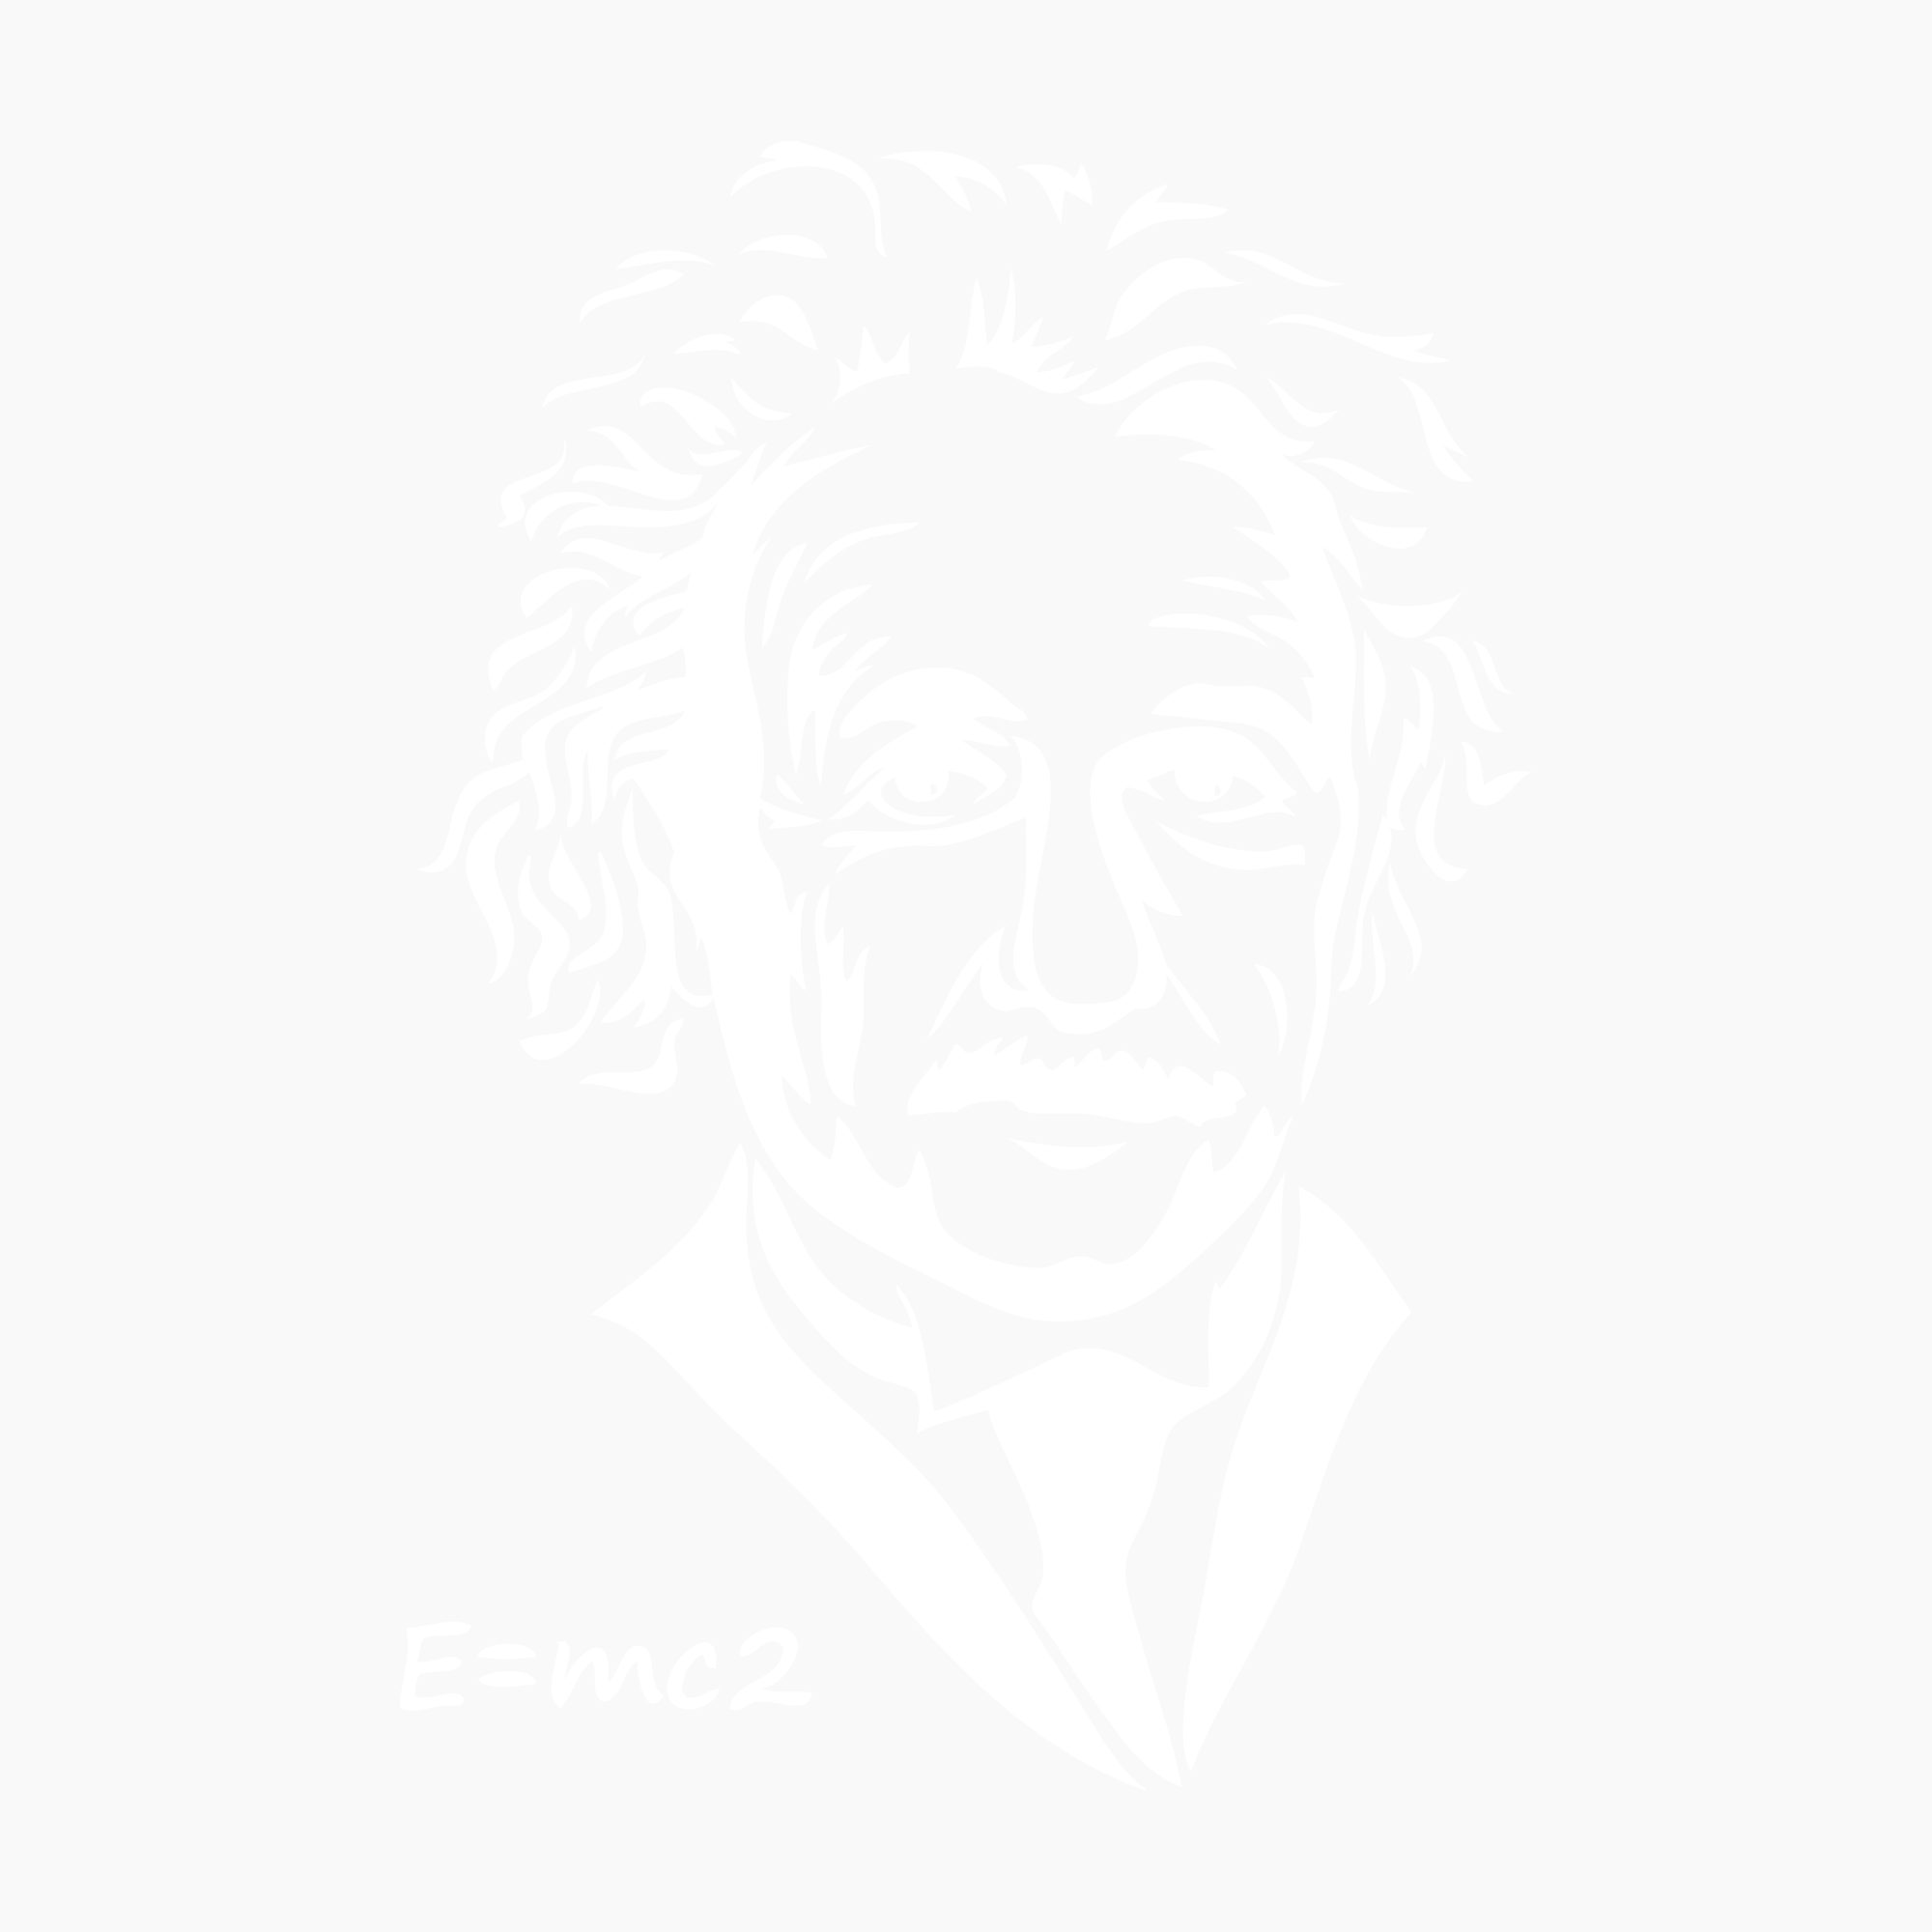 Free Albert Einstein Transparent Download Free Clip Art Free Clip Art On Clipart Library